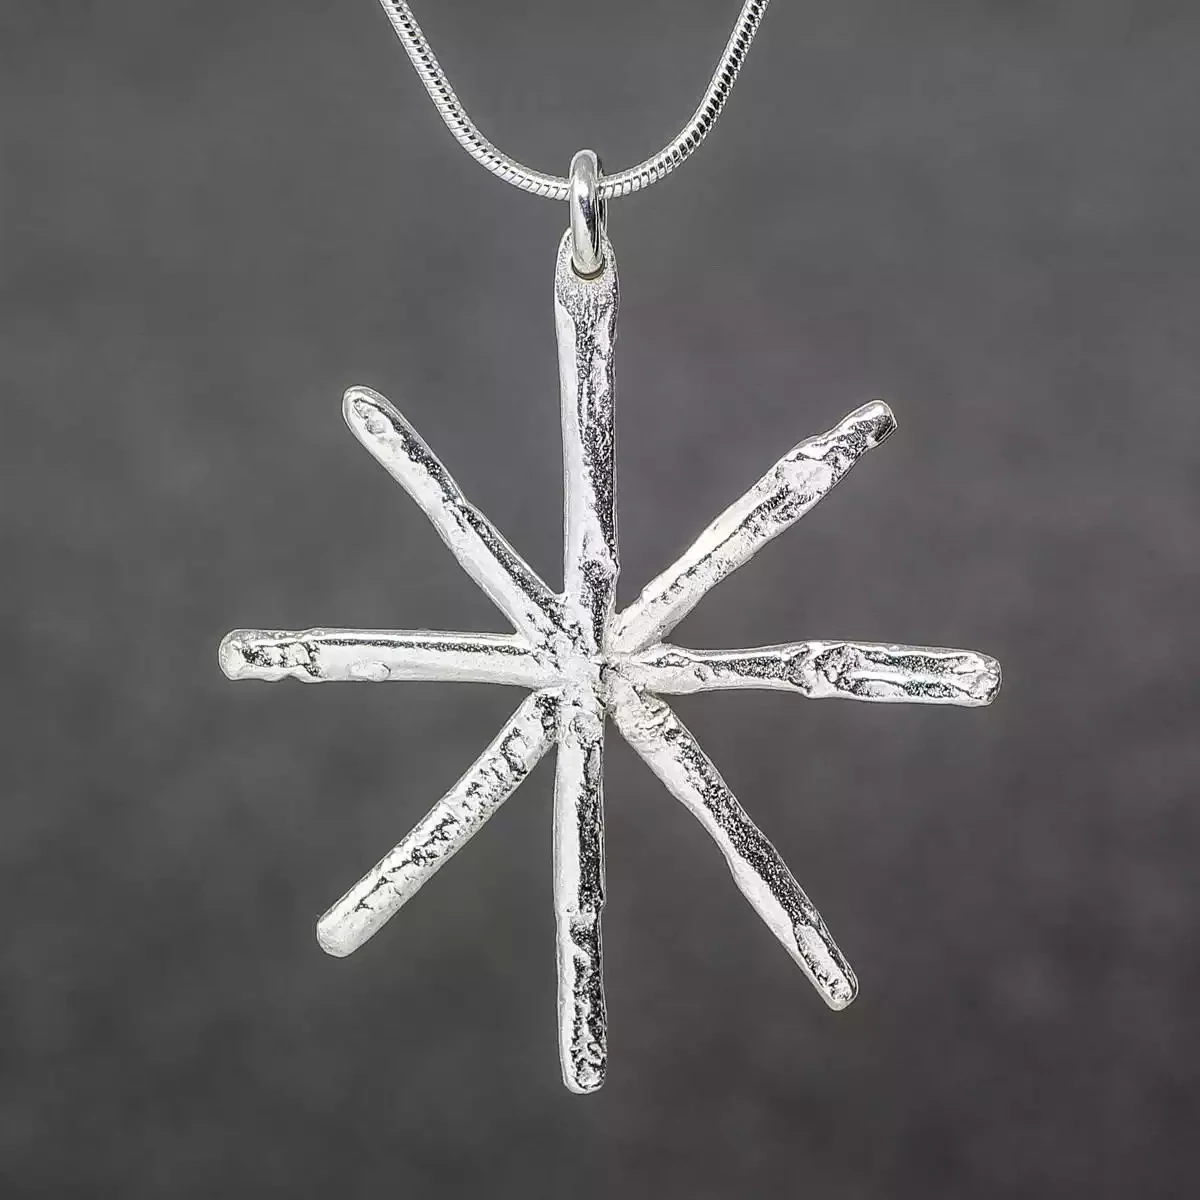 Snowflake Silver Pendant - Large by Silverfish